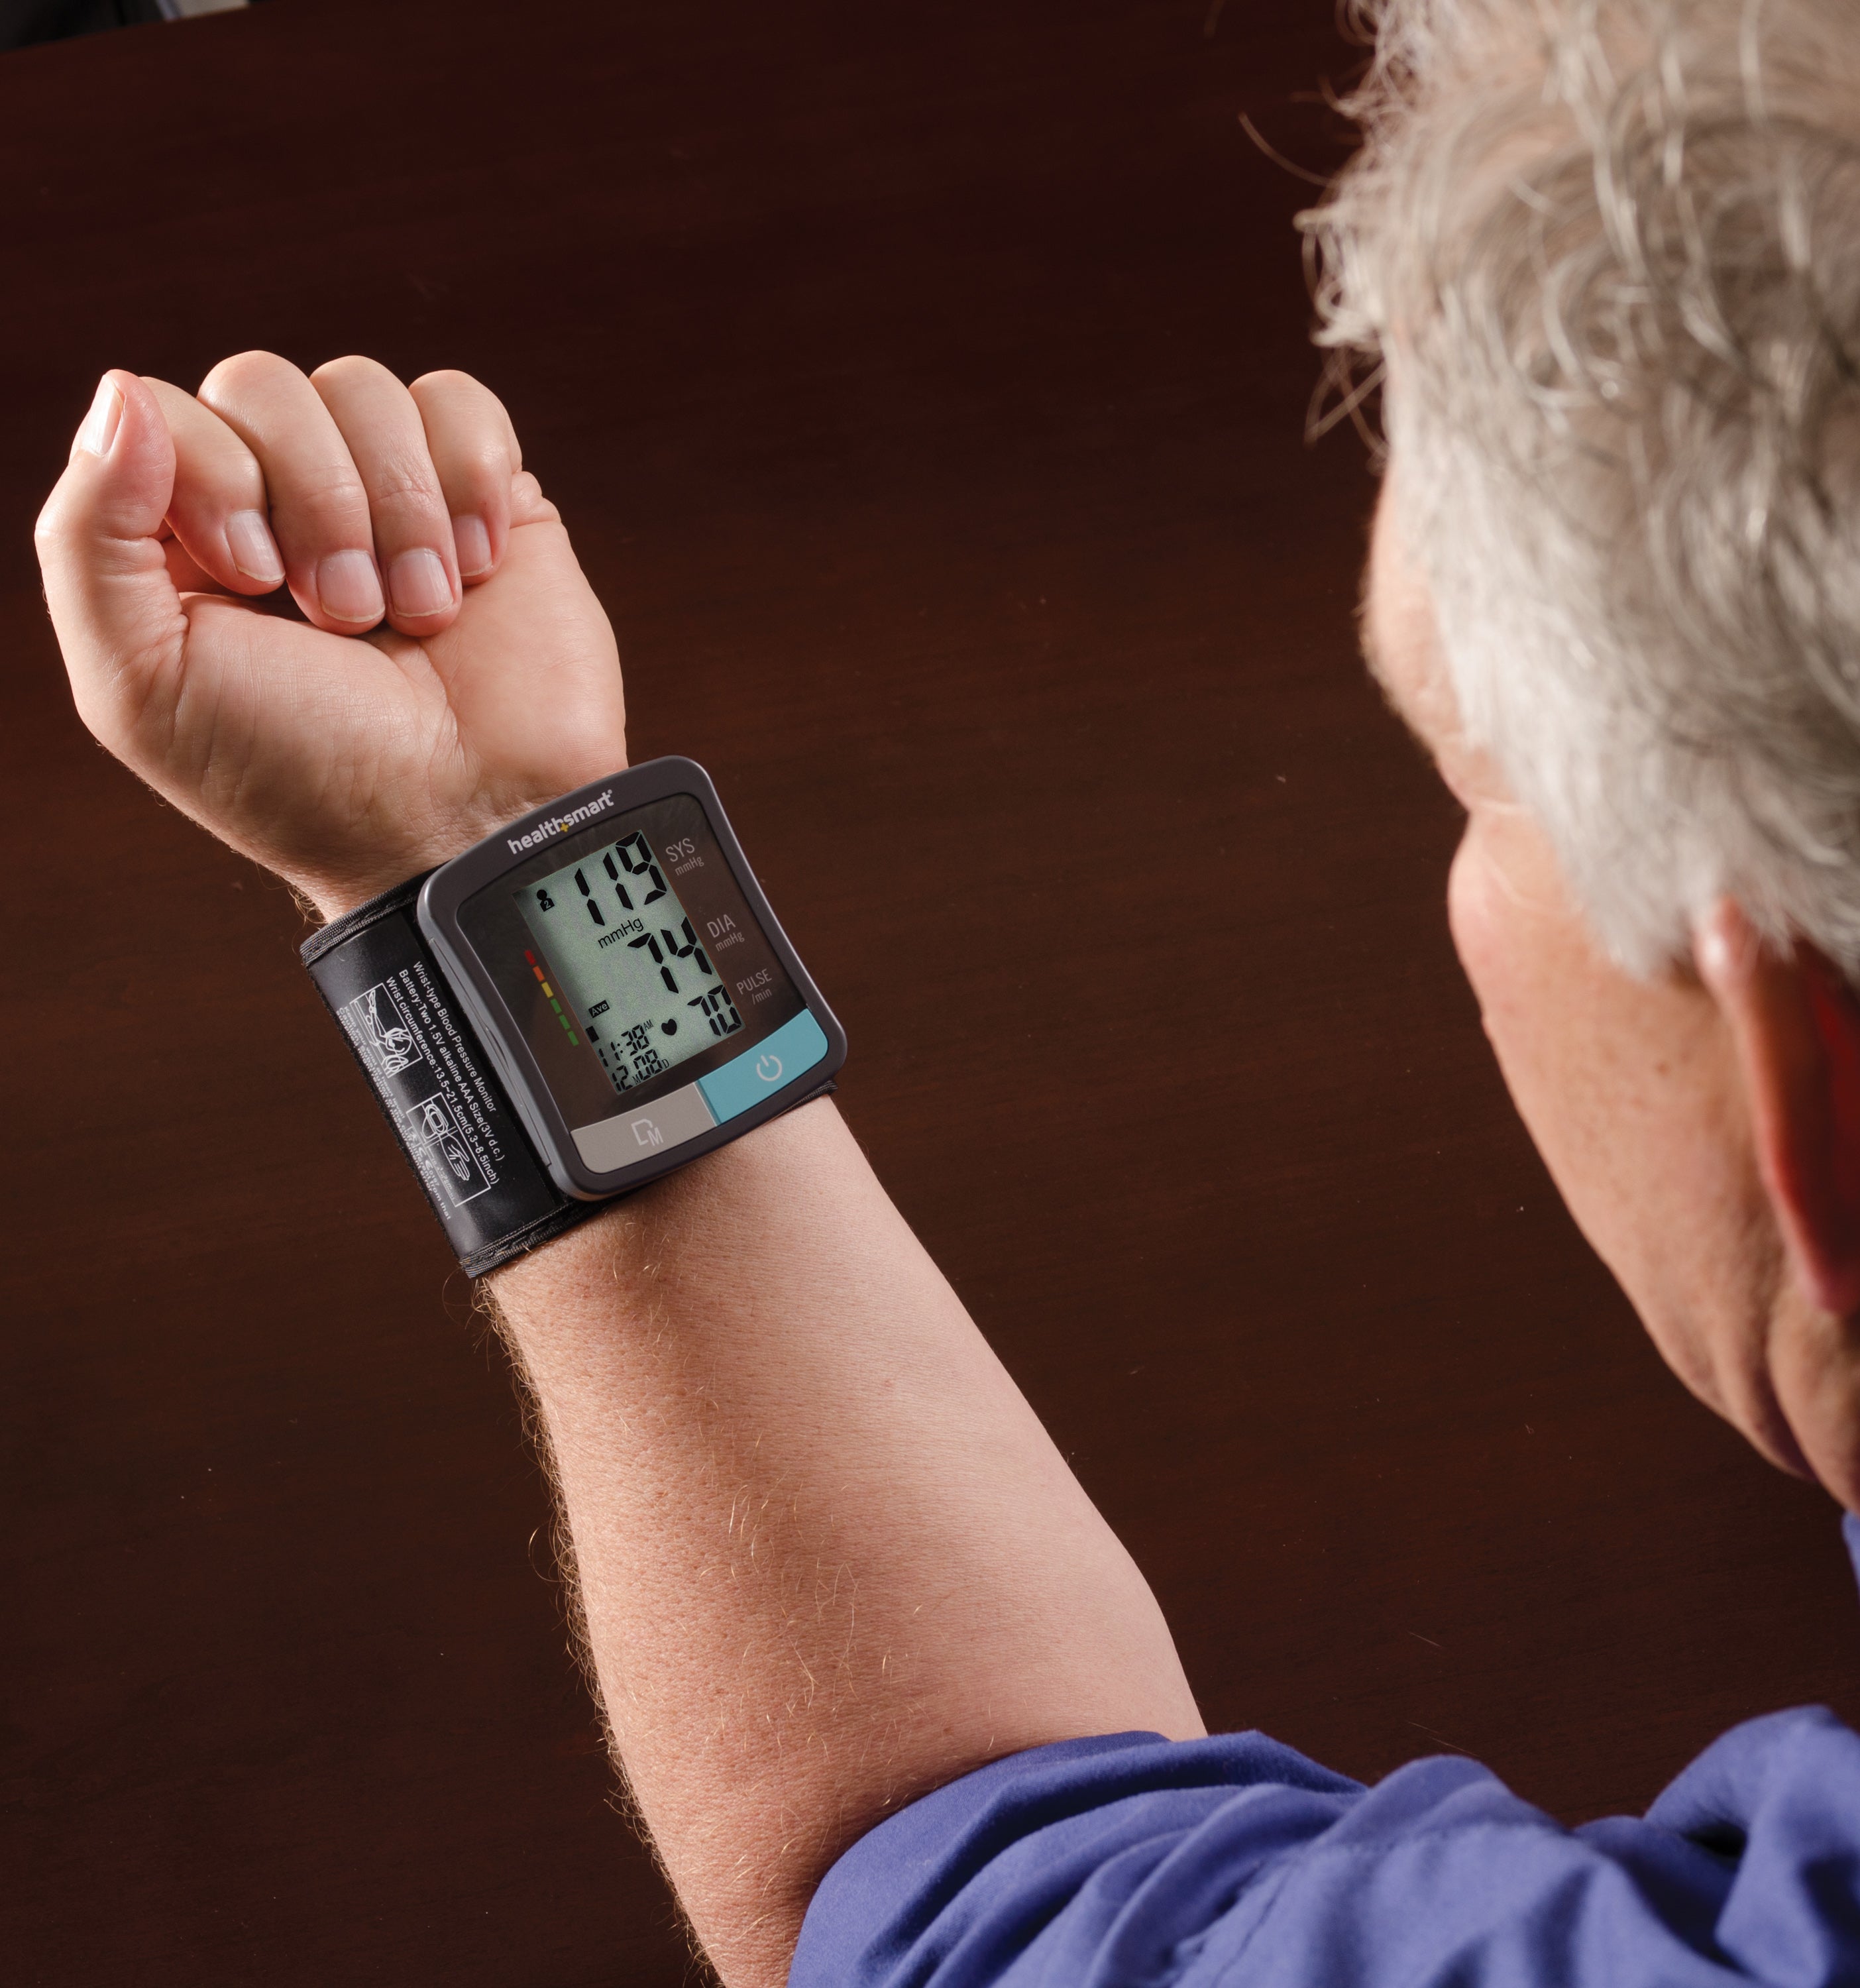 HealthSmart-Standard-Series-Wrist-Blood-Pressure-Monitor